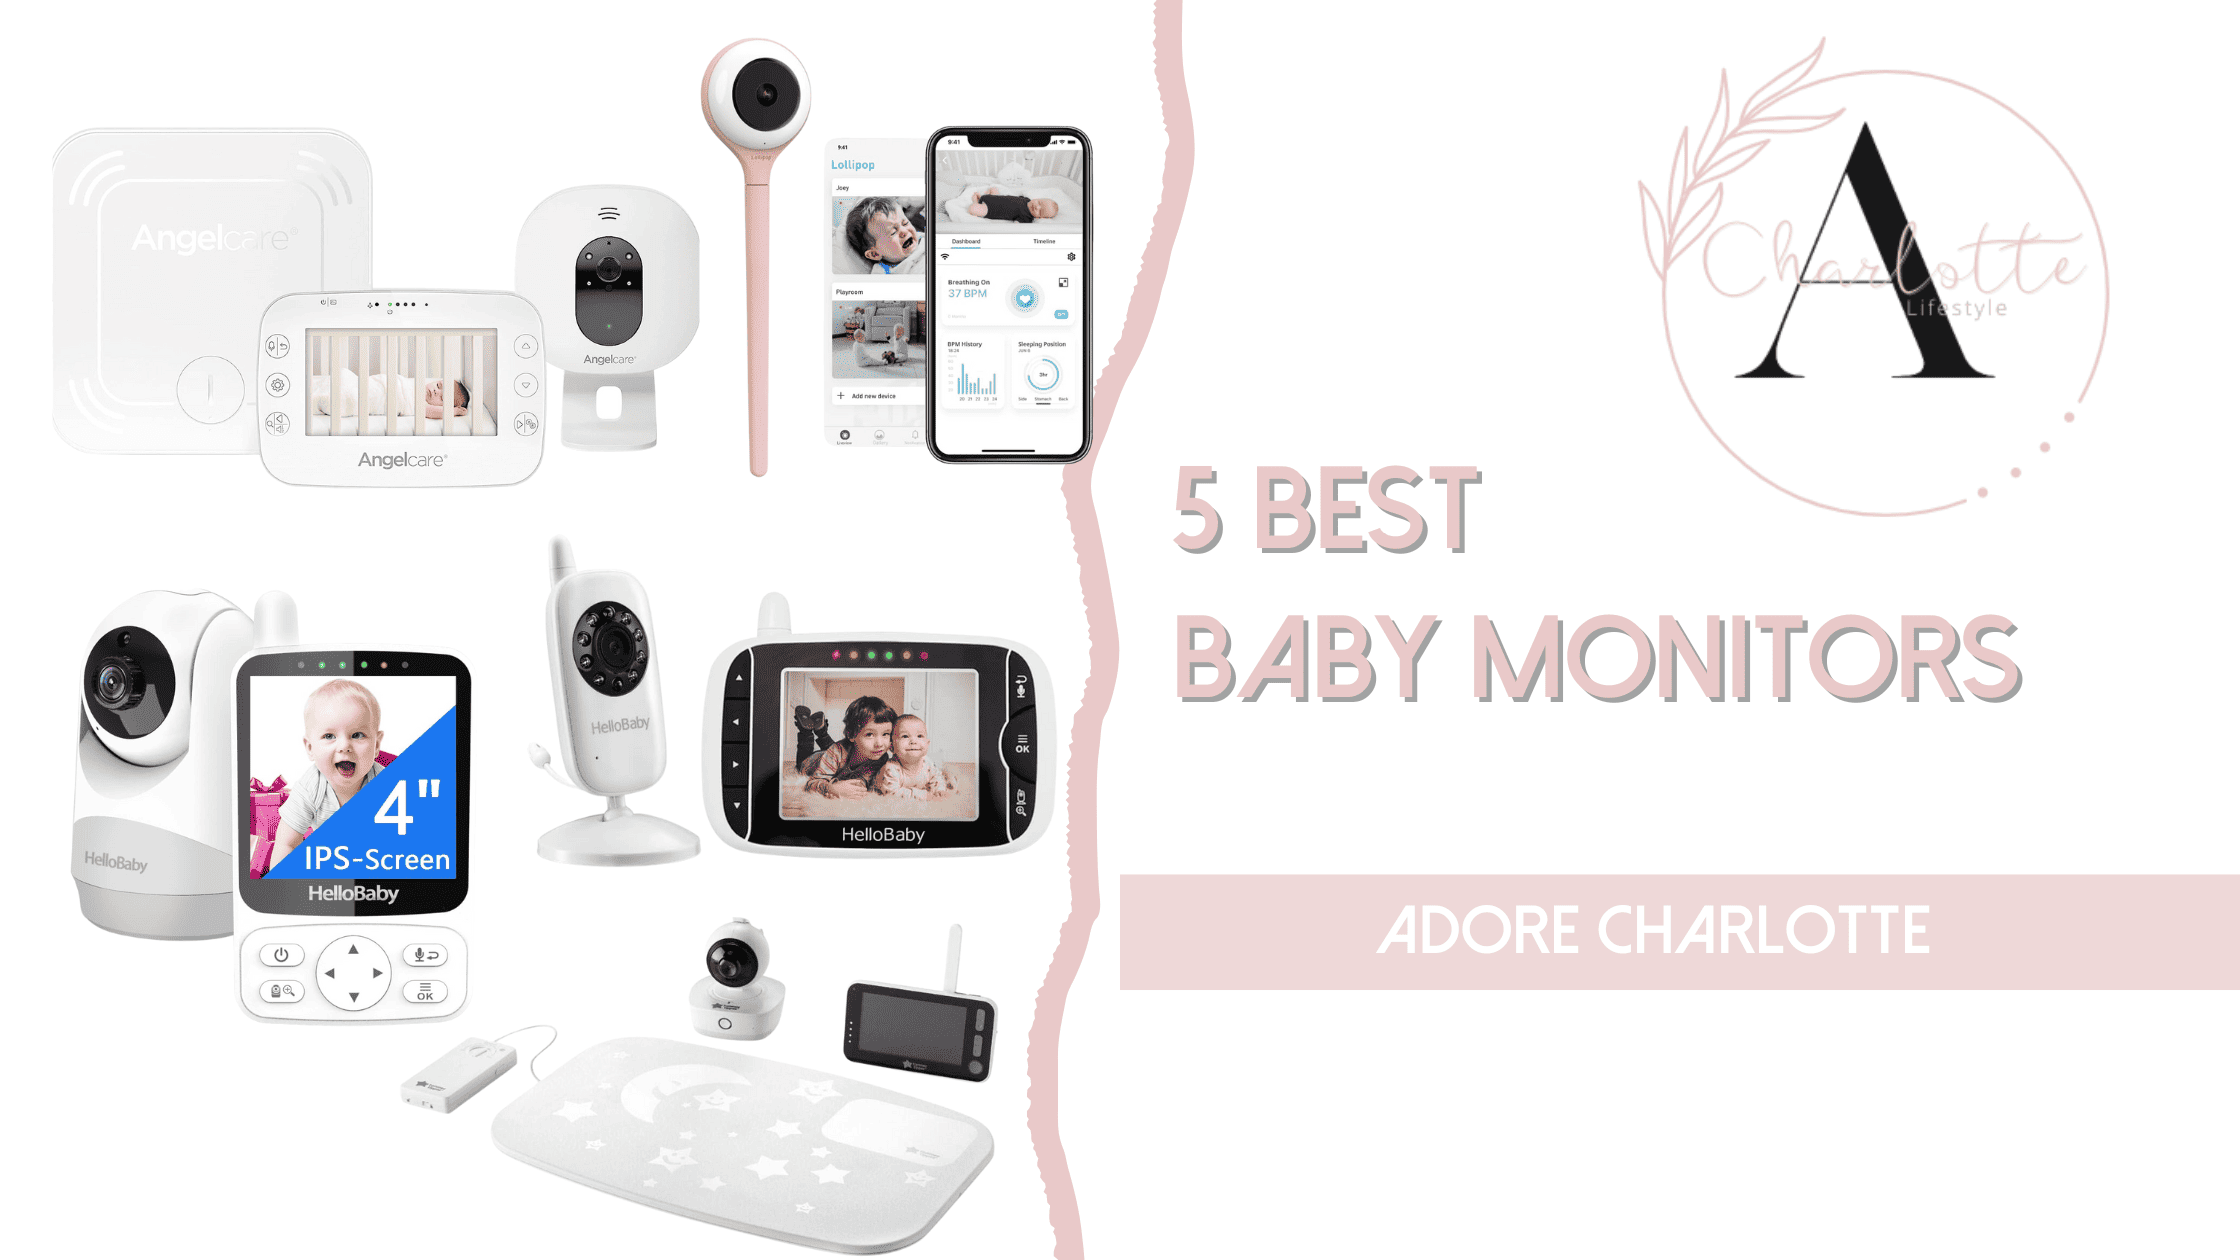 Adore Charlotte Main Image - Best Baby Monitors